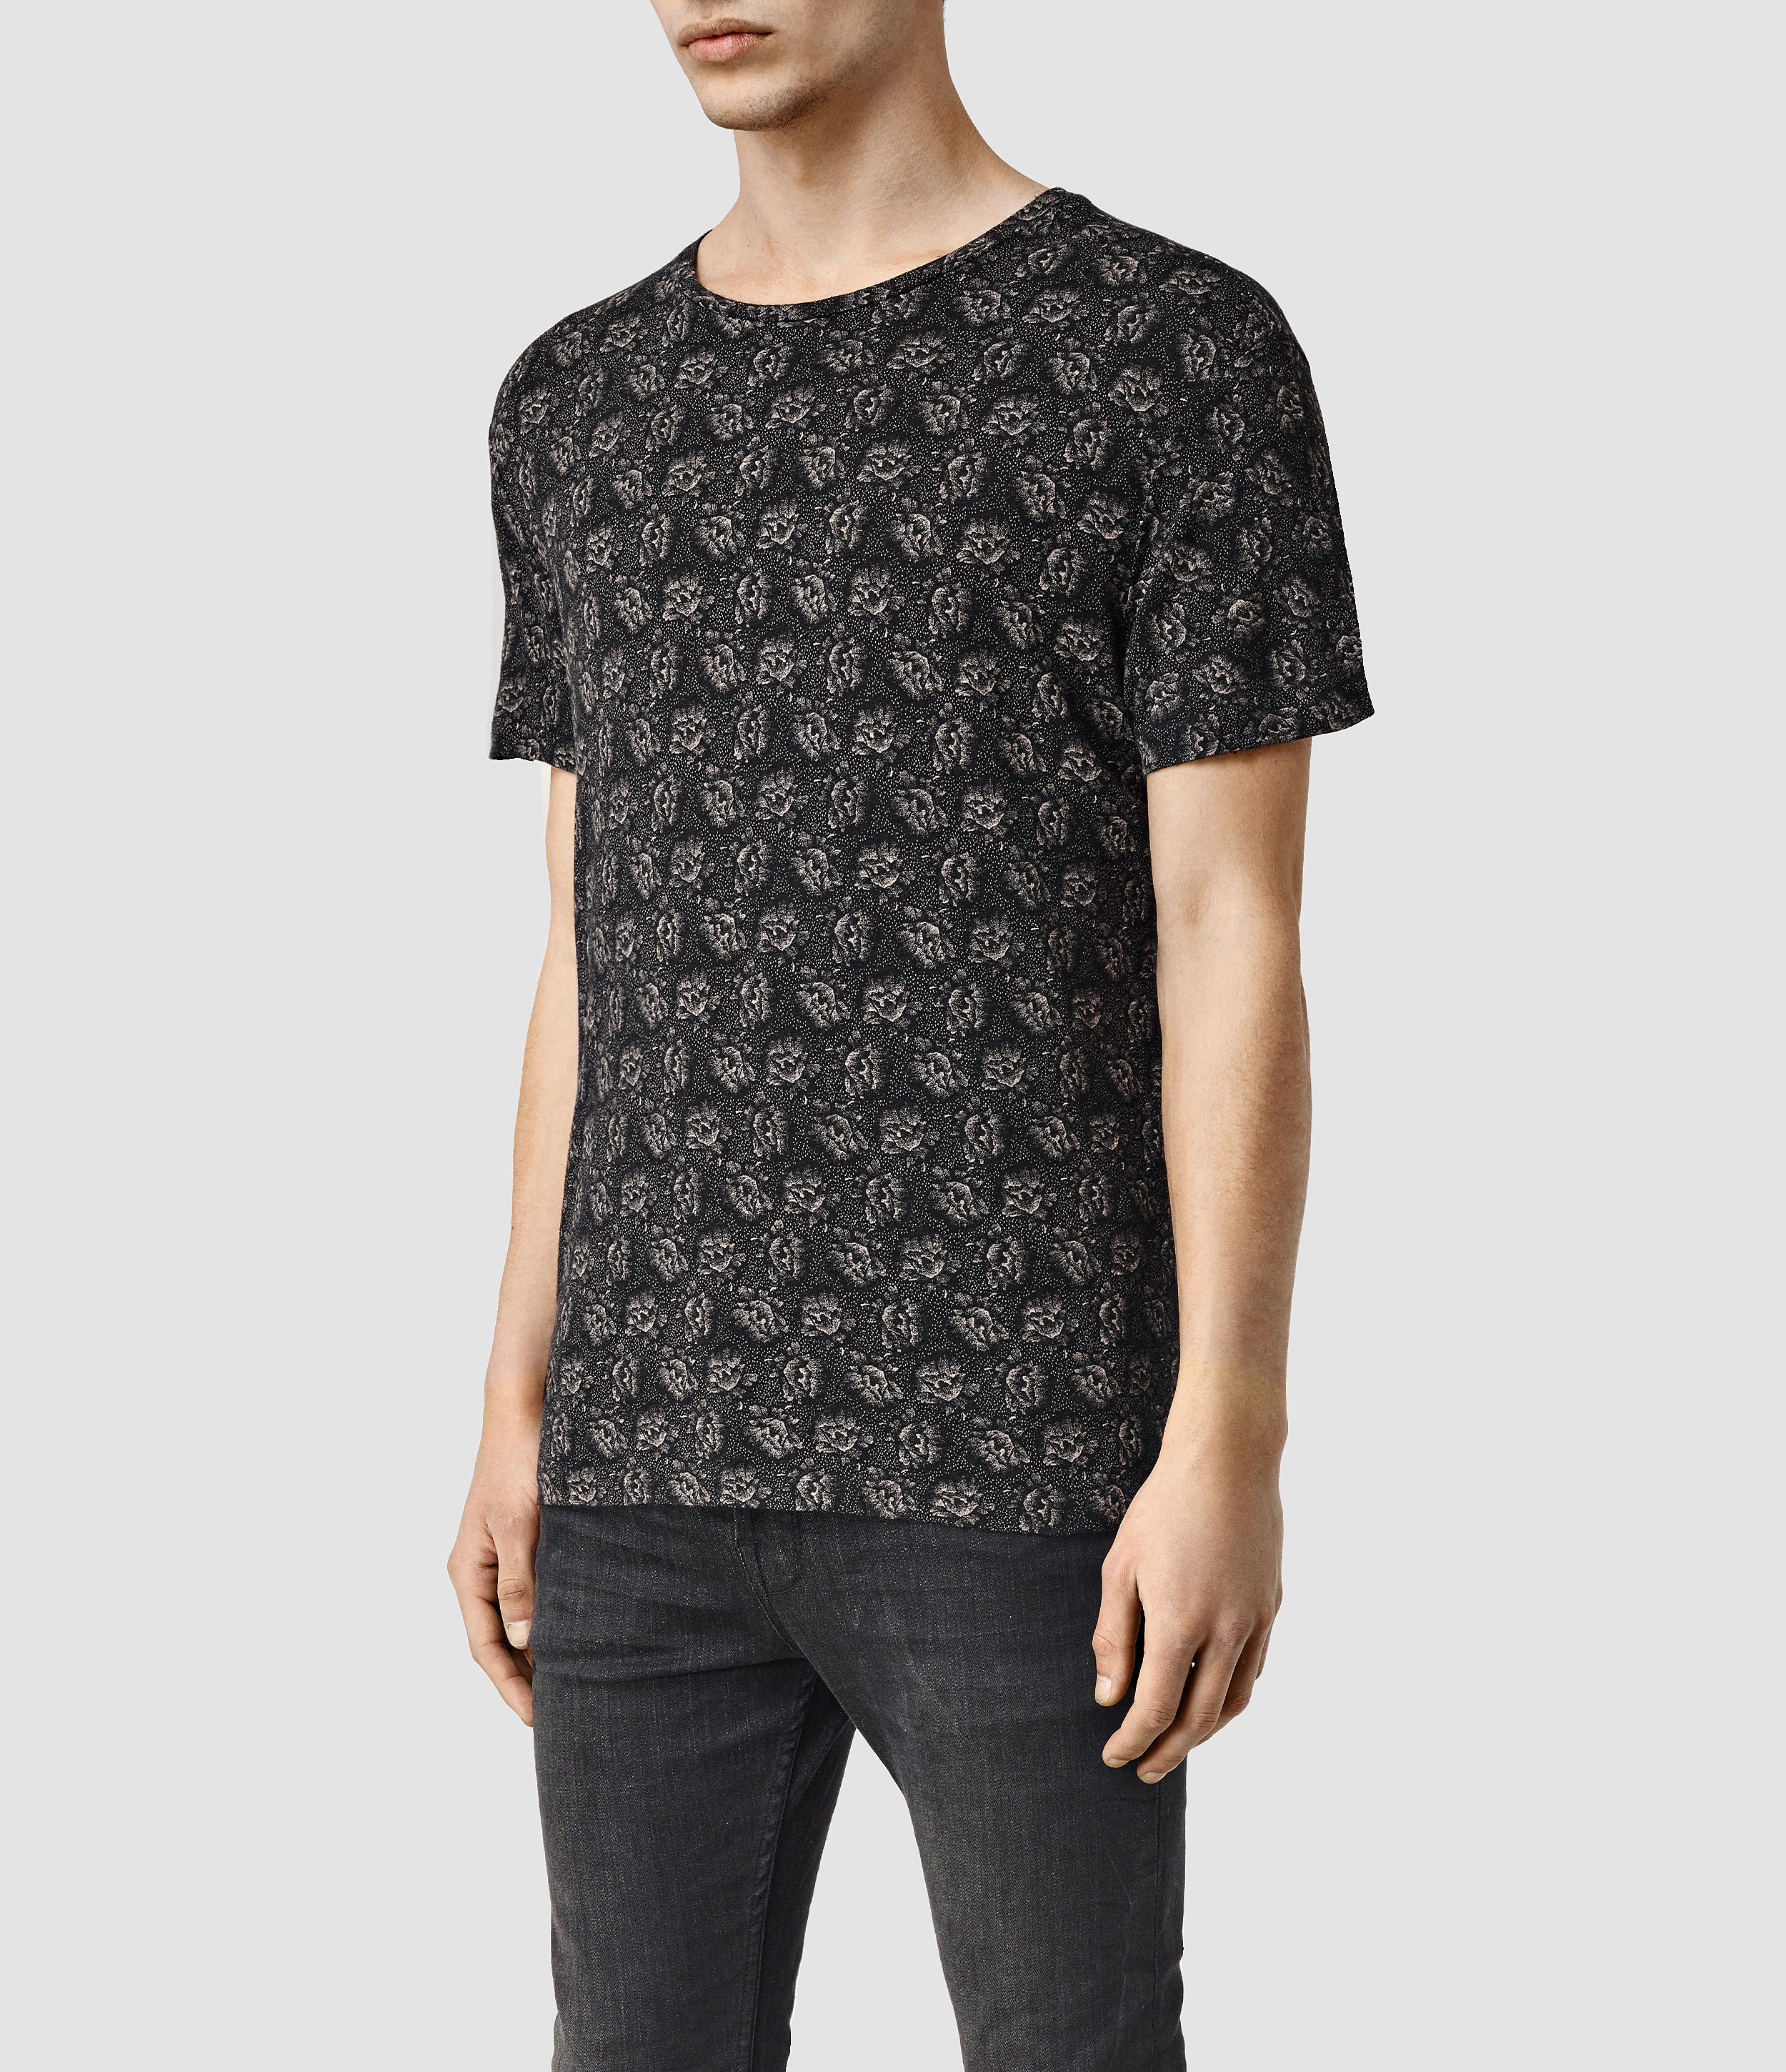 Lyst - AllSaints Opium Crew Neck Floral T-shirt in Black for Men